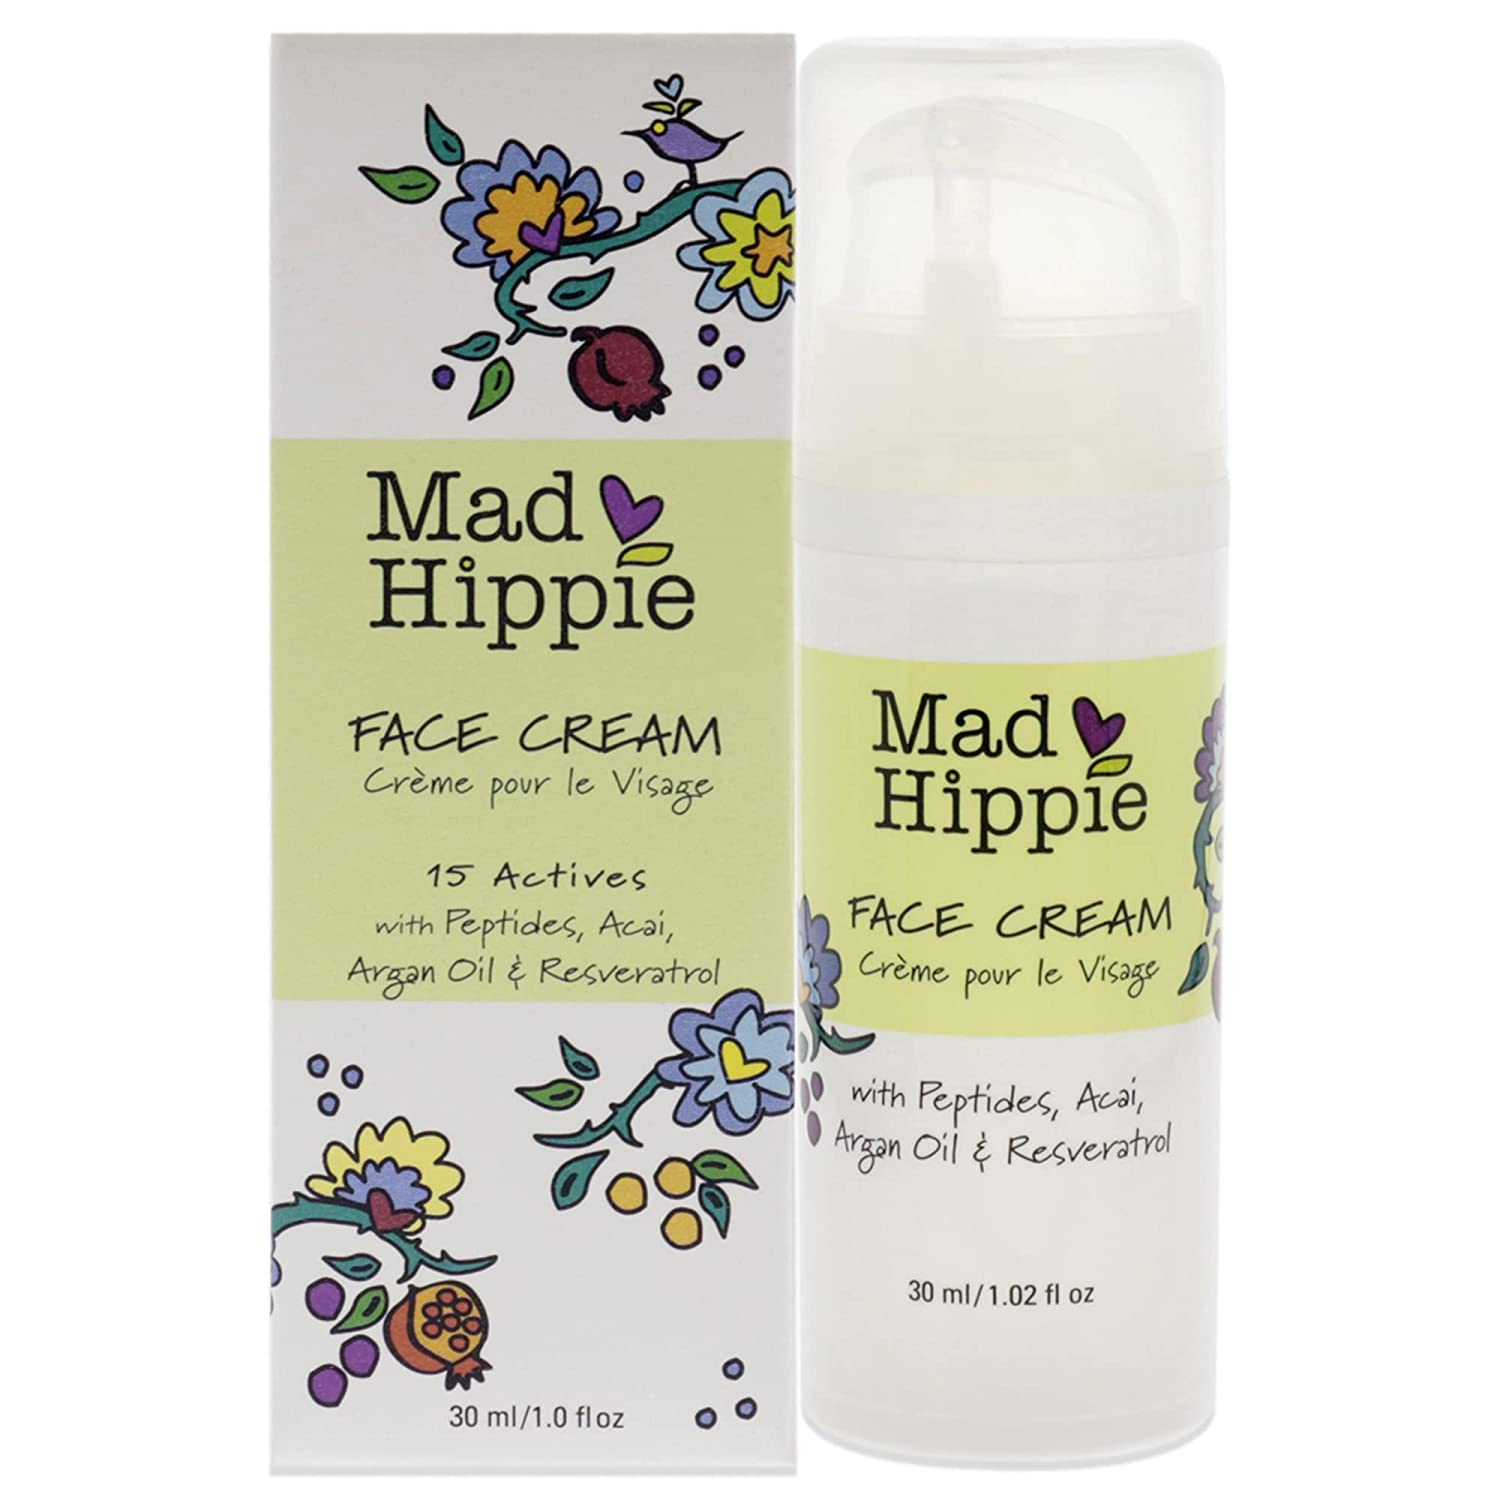 Mad Hippie Face Cream with 15 Actives, Peptides, Acai, Argan Oil & Resveratrol